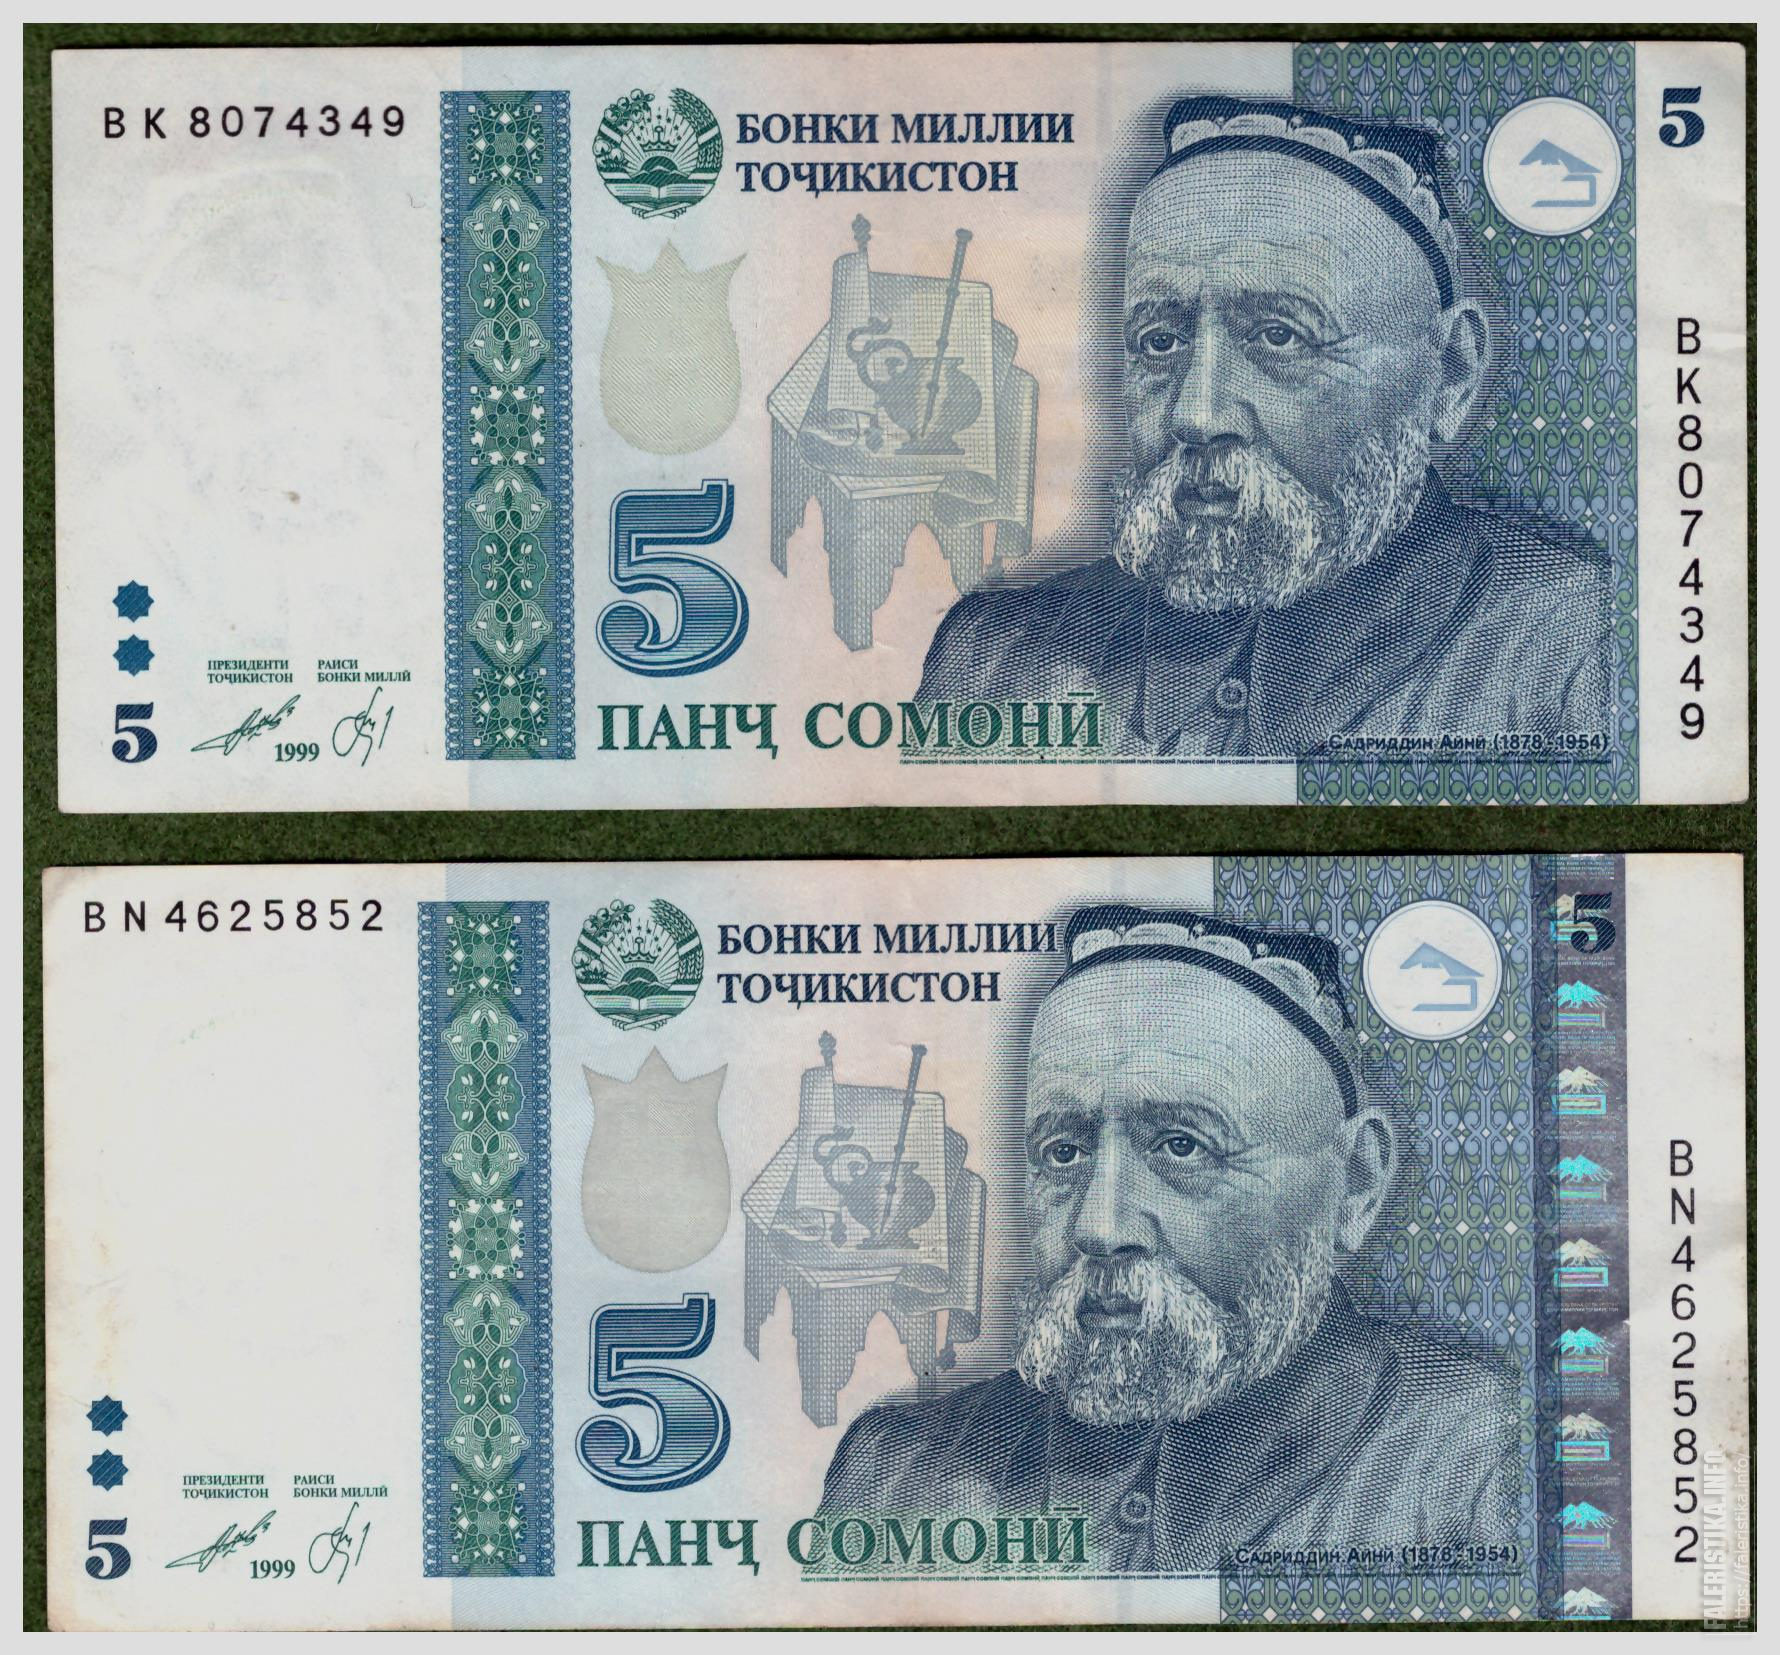 Курсы валют таджикистан на сегодня рубл сомони. Таджикский Сомони купюры. Денежные купюры Таджикистана. Купюры Таджикистана Сомони. Денежные знаки Таджикистана.